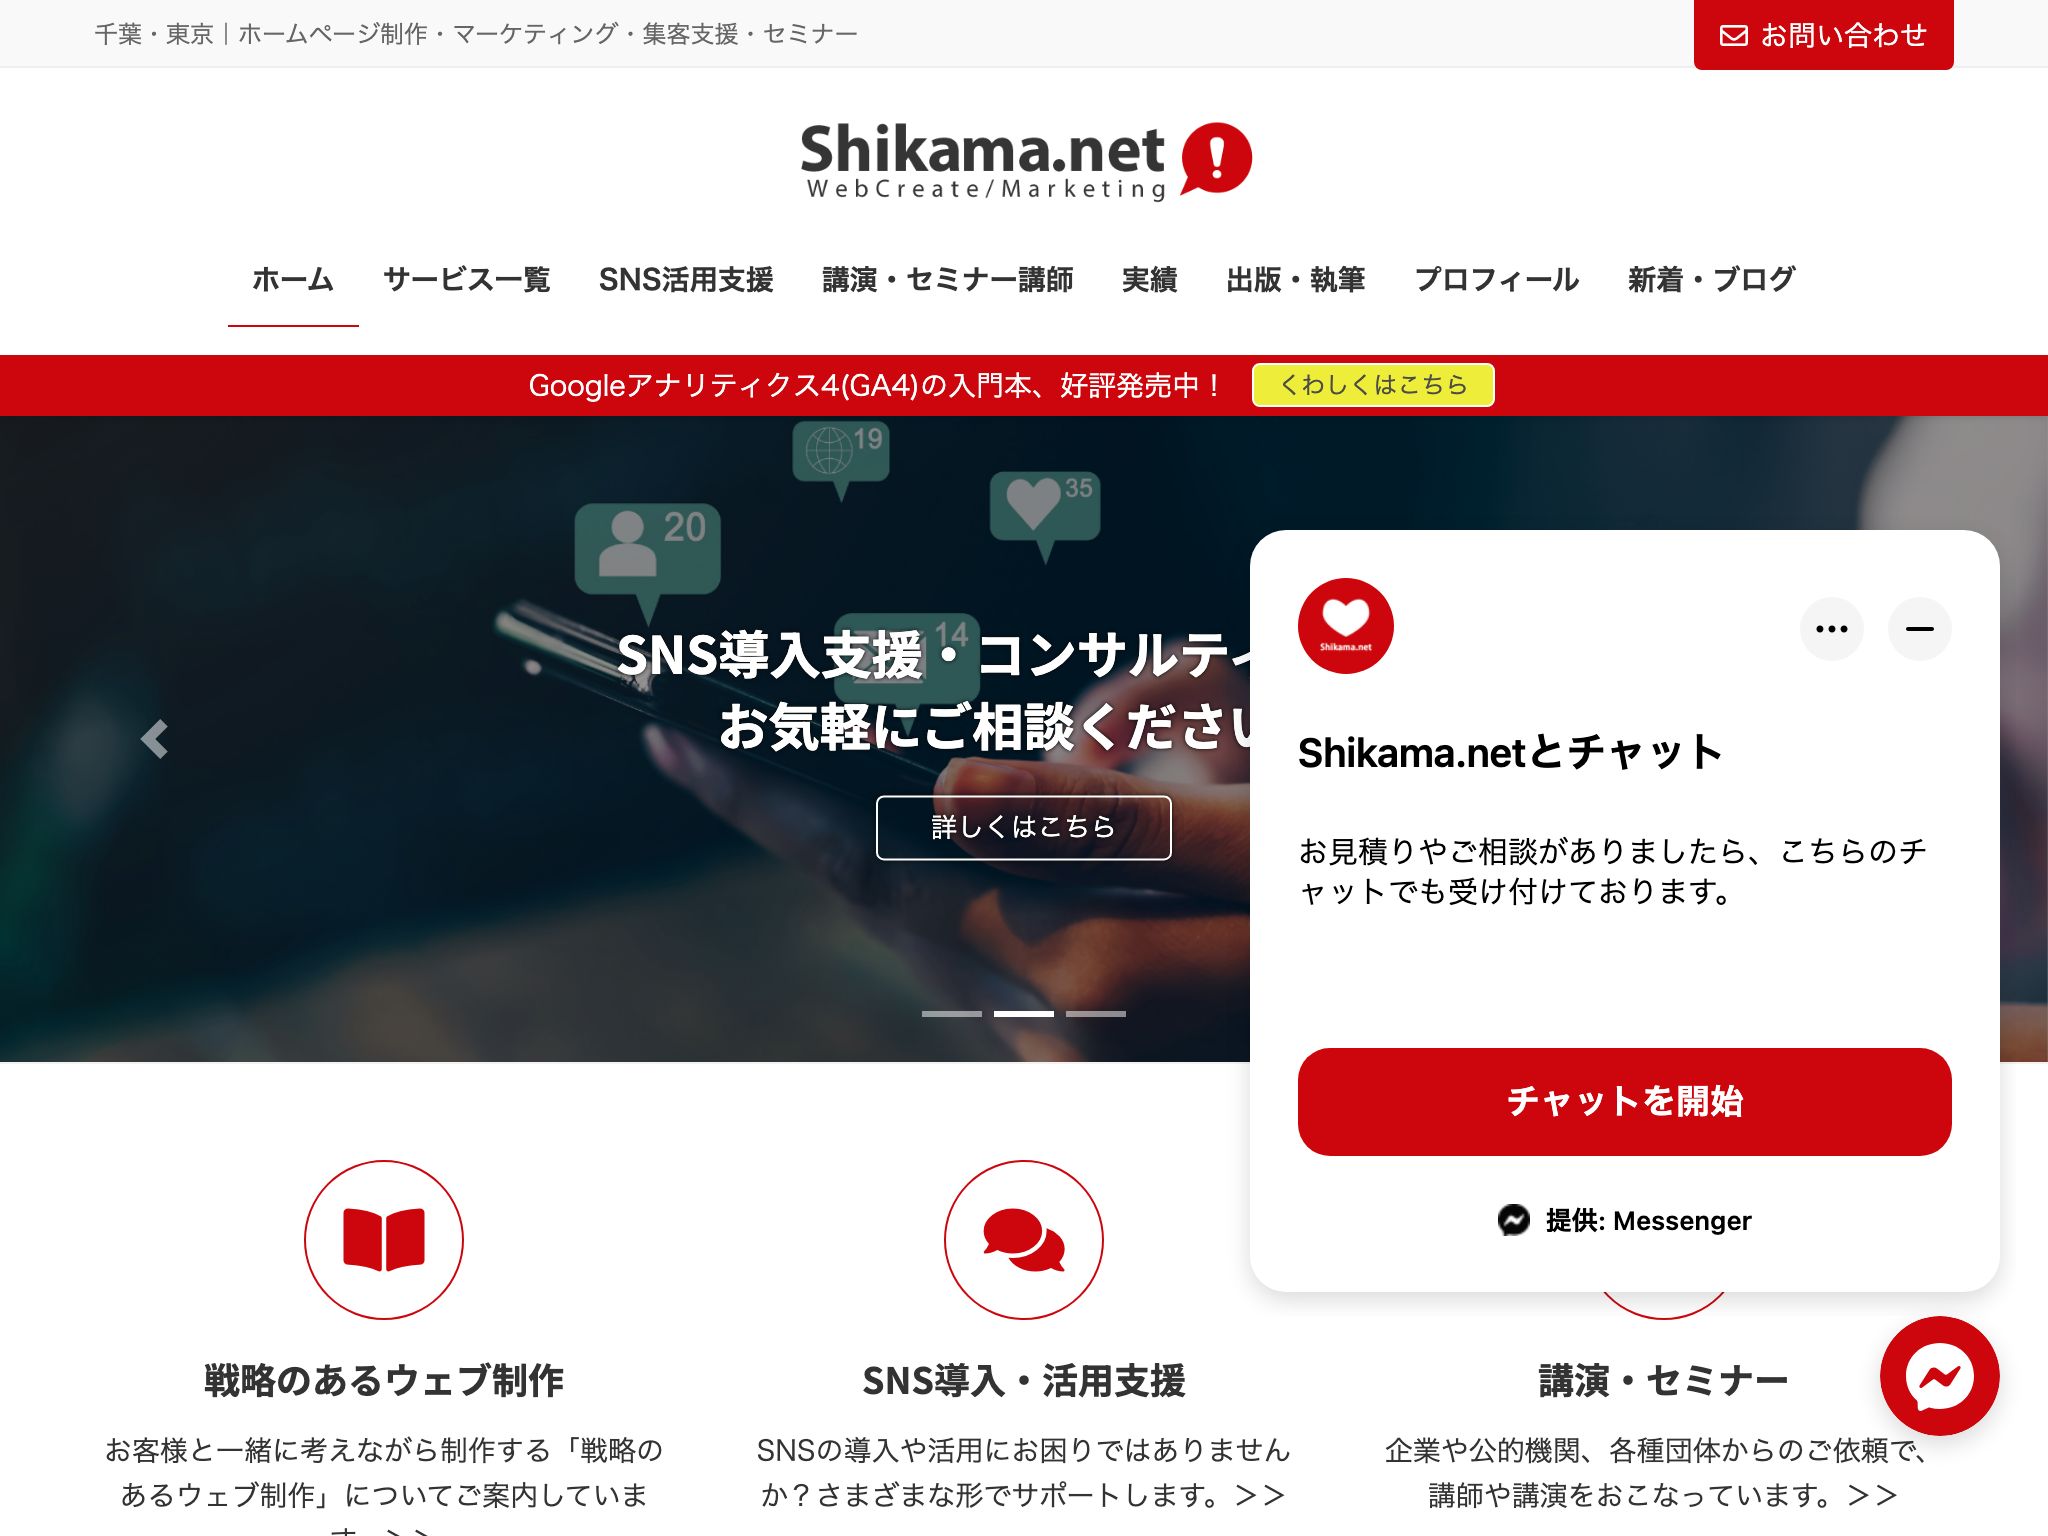 Shikama.net